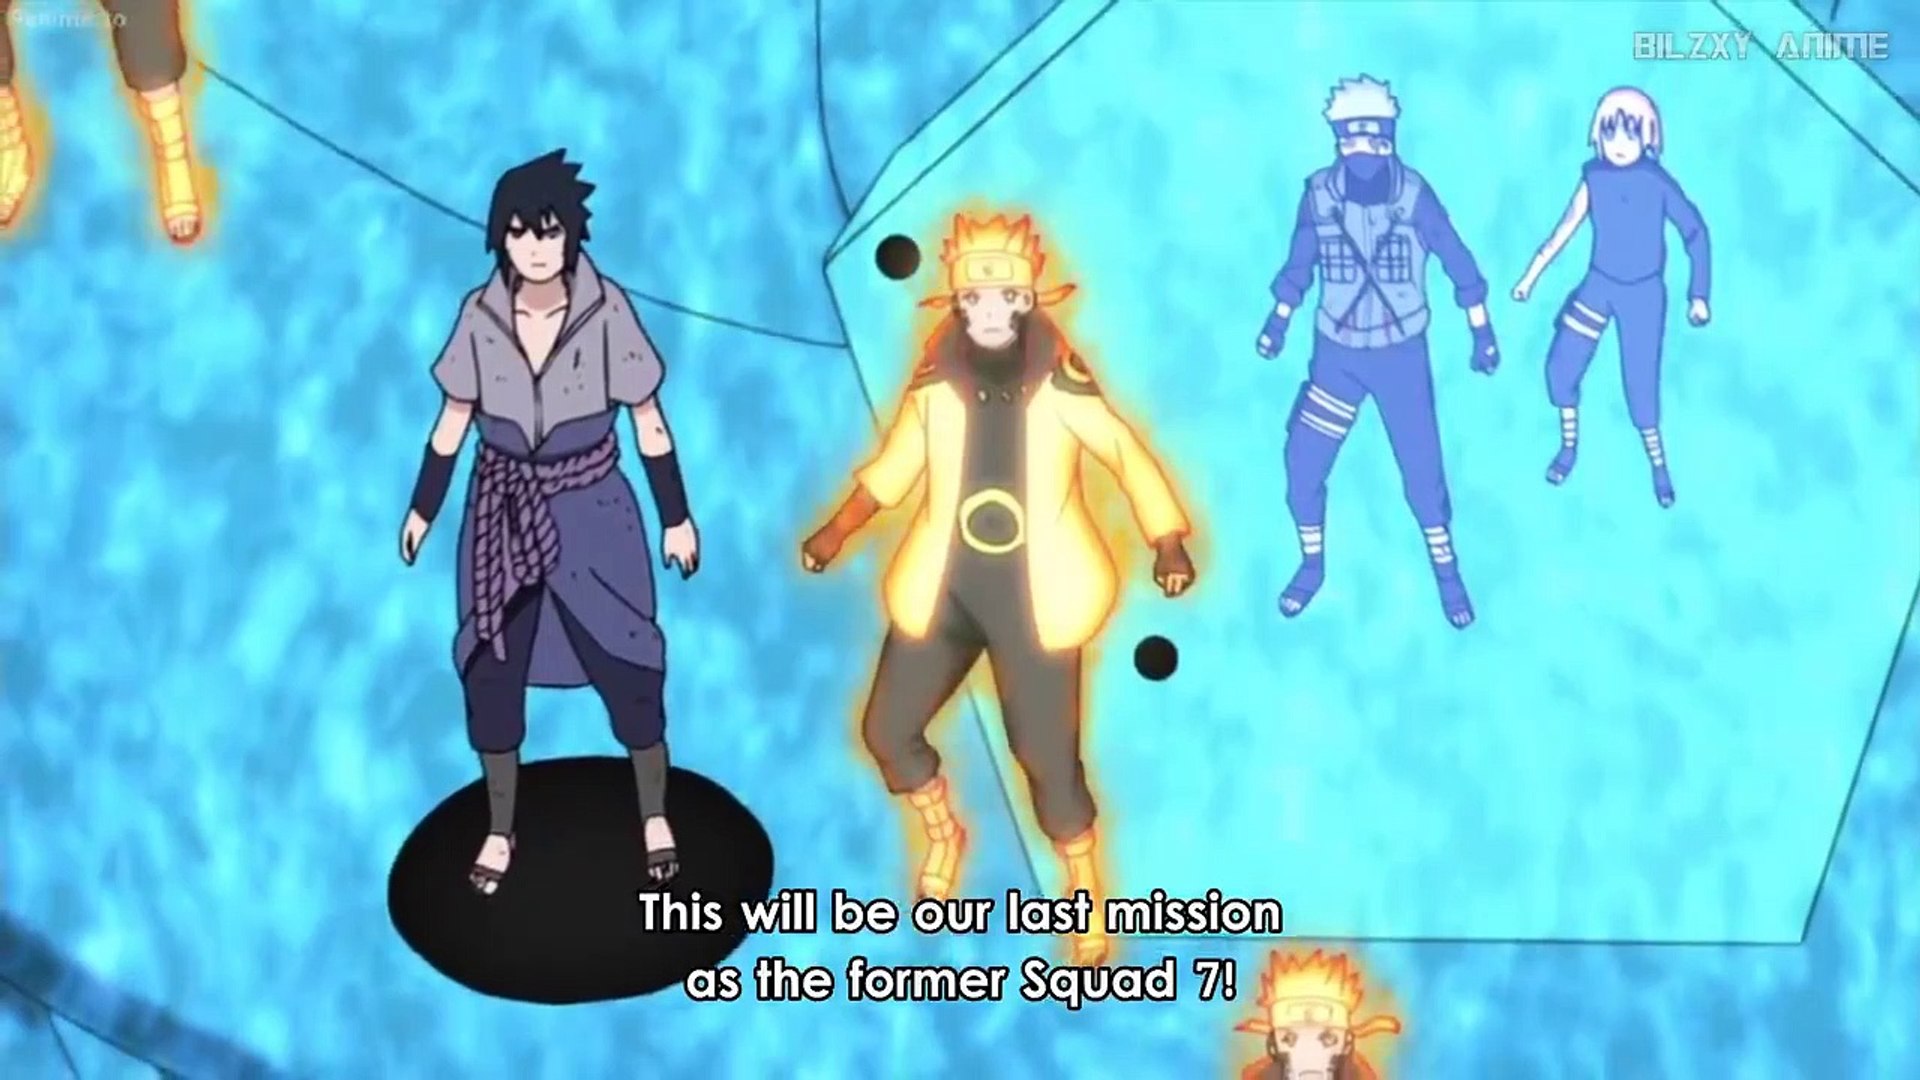 Naruto vs Sasuke Final Battle [HD] - video Dailymotion